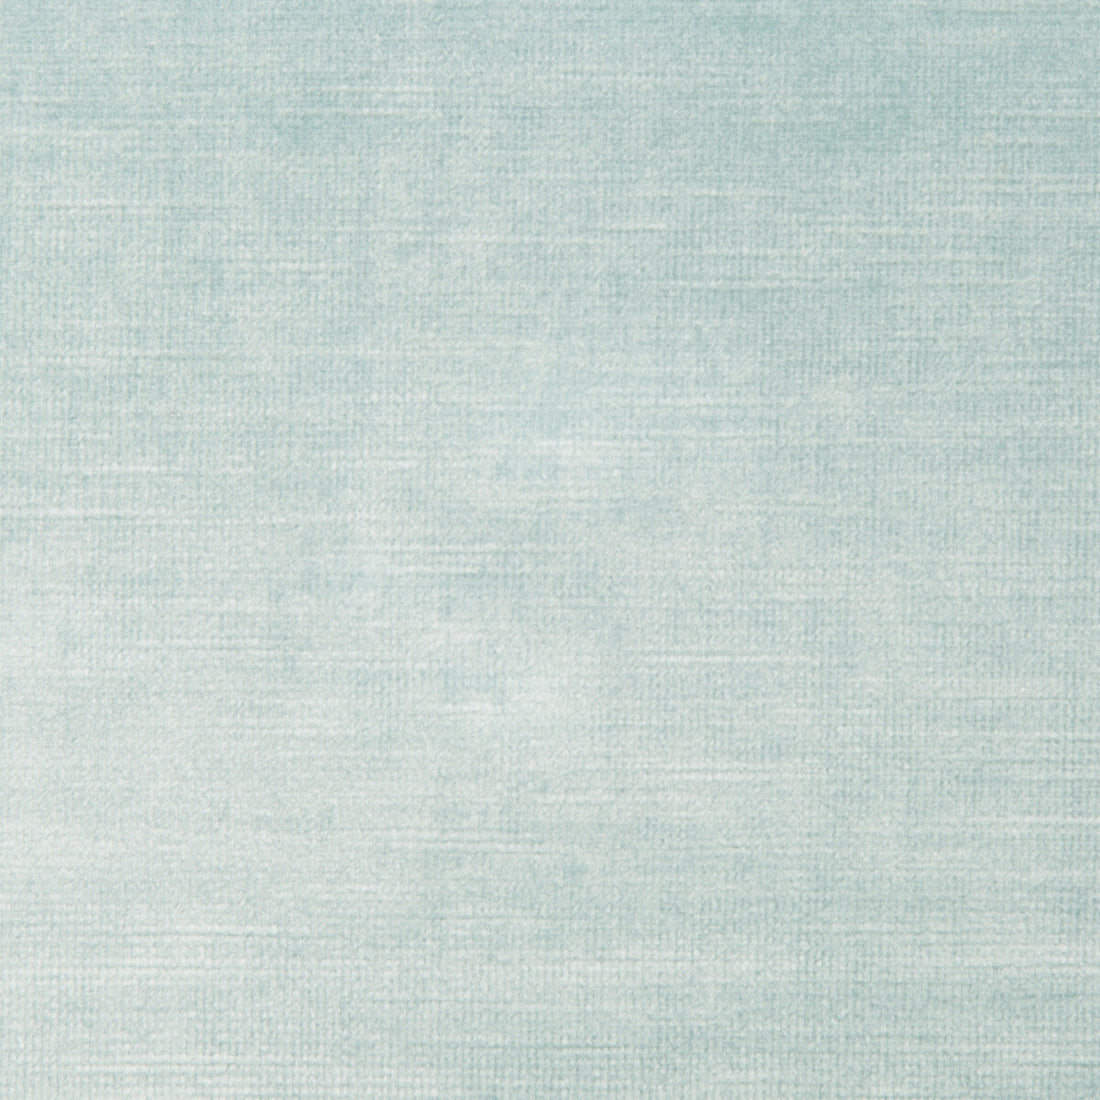 Venetian fabric in horizon color - pattern 31326.1313.0 - by Kravet Design